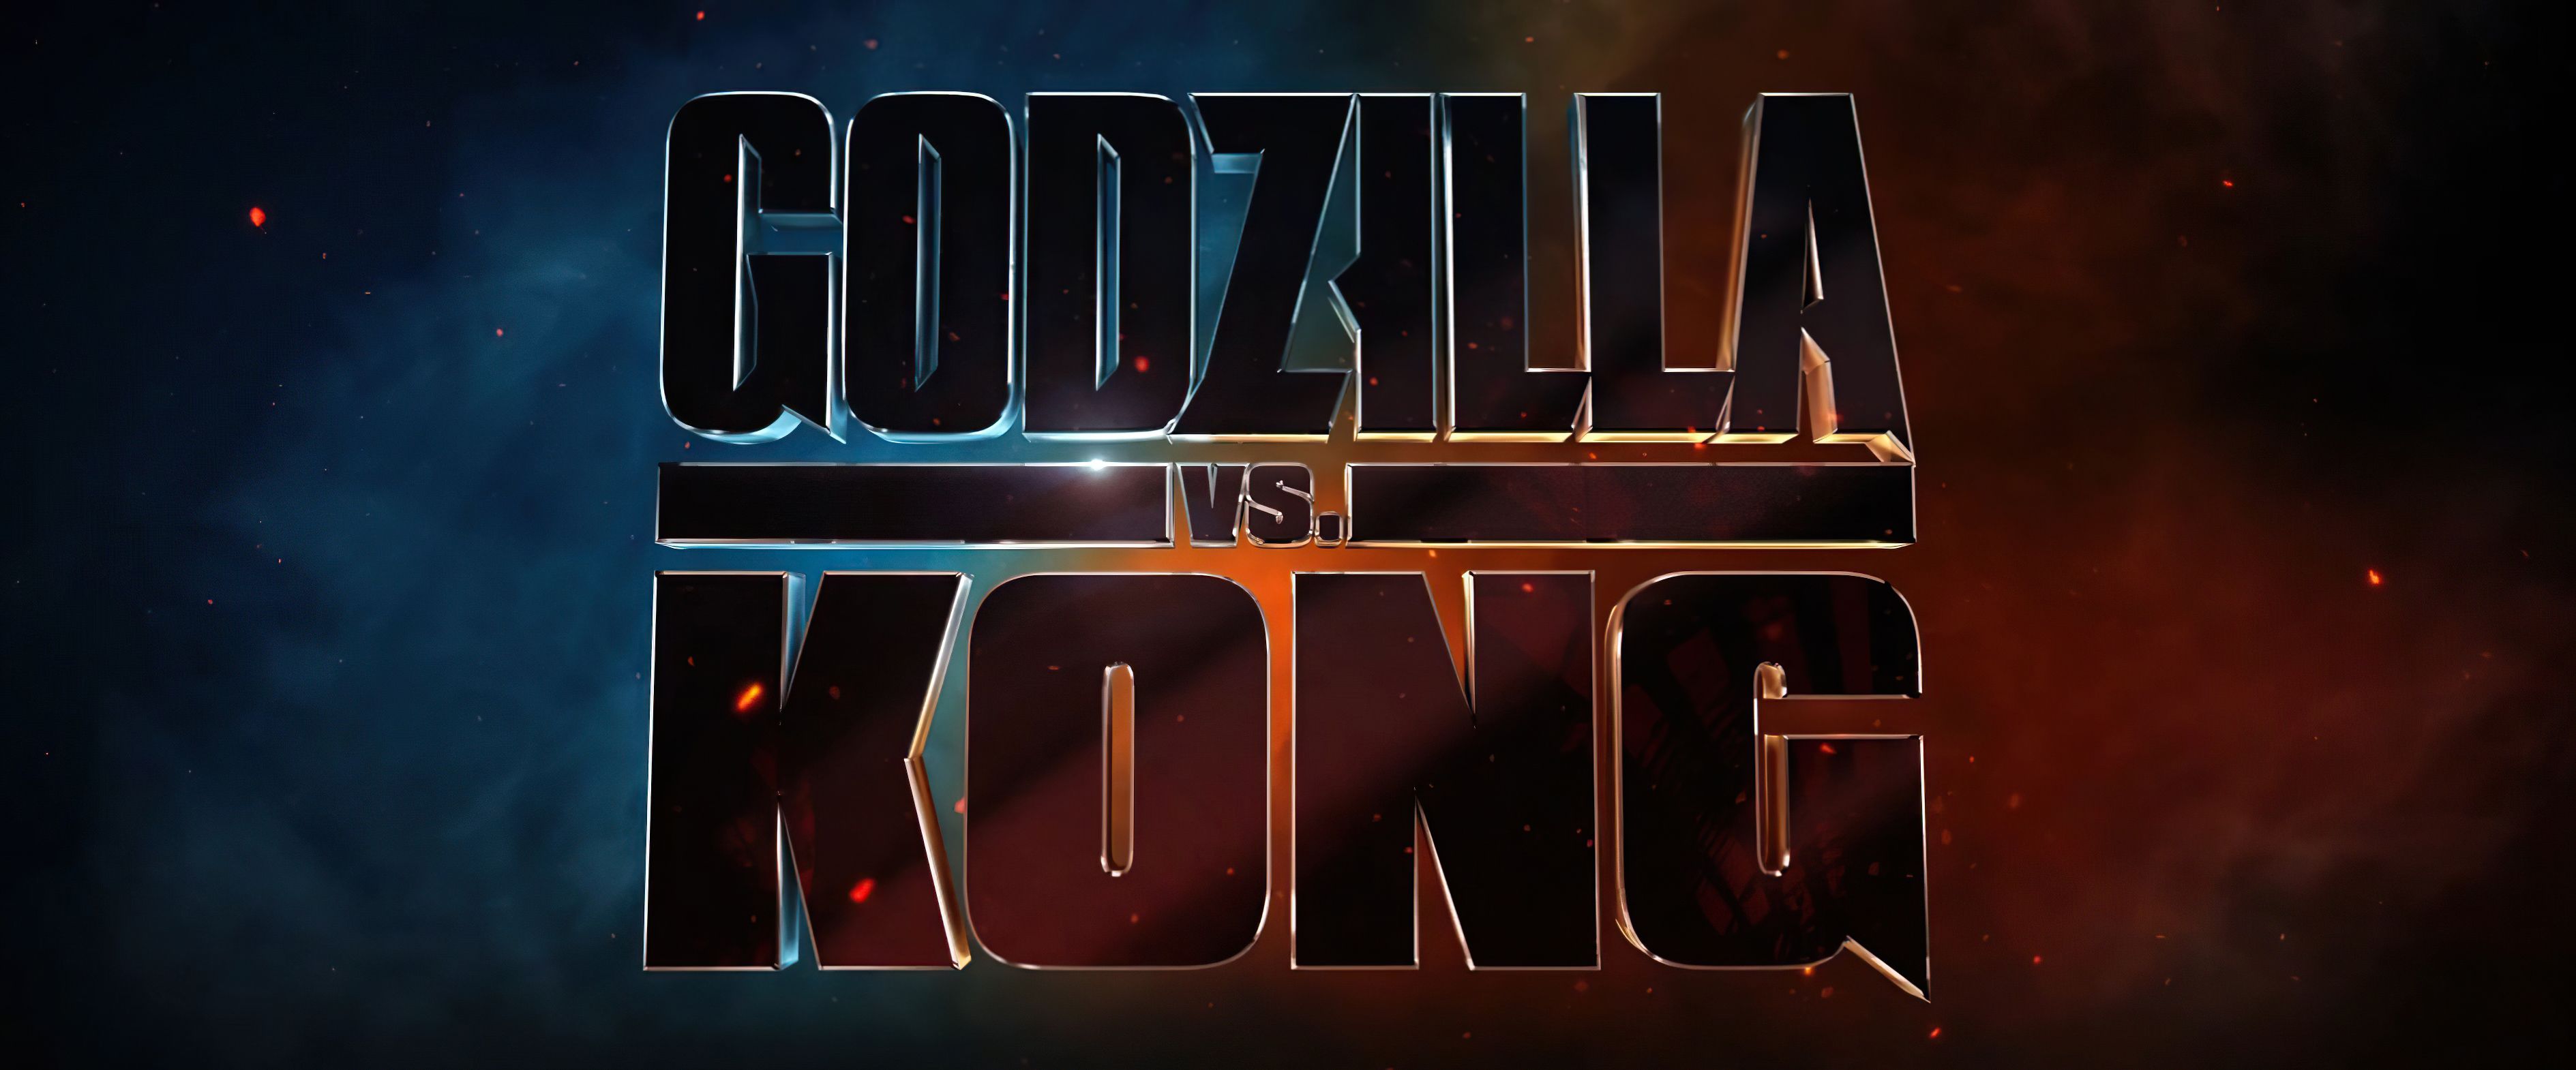 Godzilla Vs Kong 2021 Laptop Full HD 1080P HD 4k Wallpaper, Image, Background, Photo and Picture